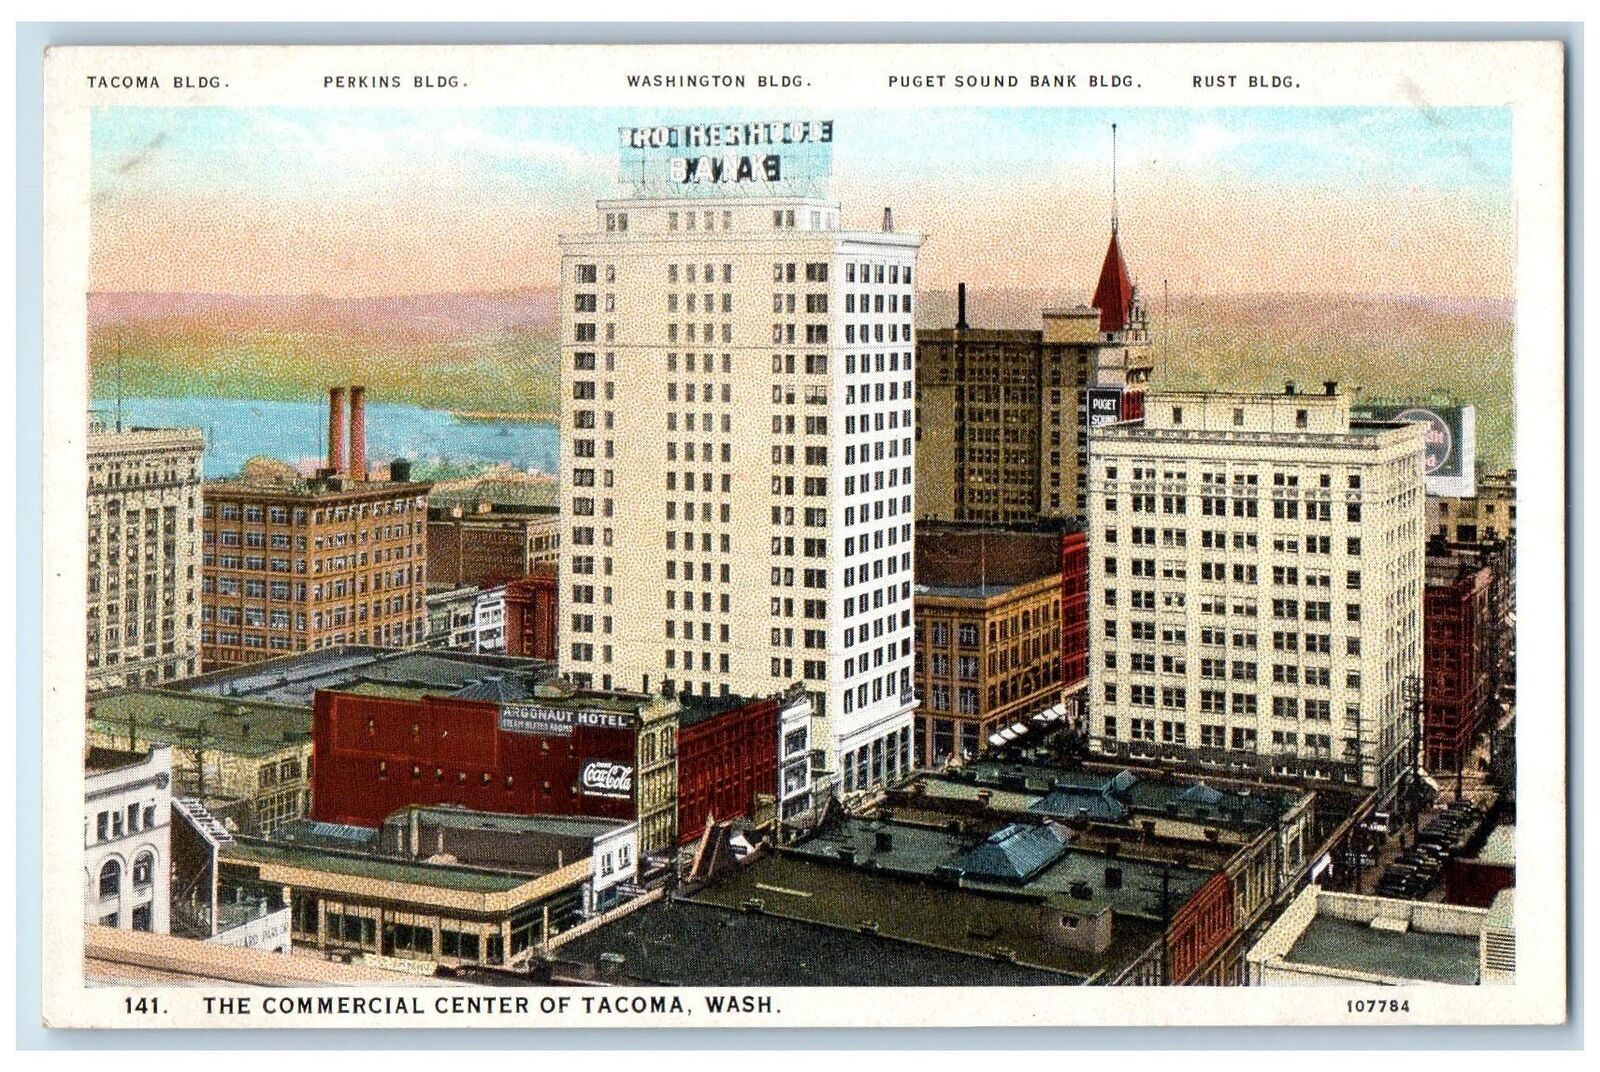 c1920s The Commercial Center Of Tacoma Washington Bldg. Rust Bldg. WA Postcard